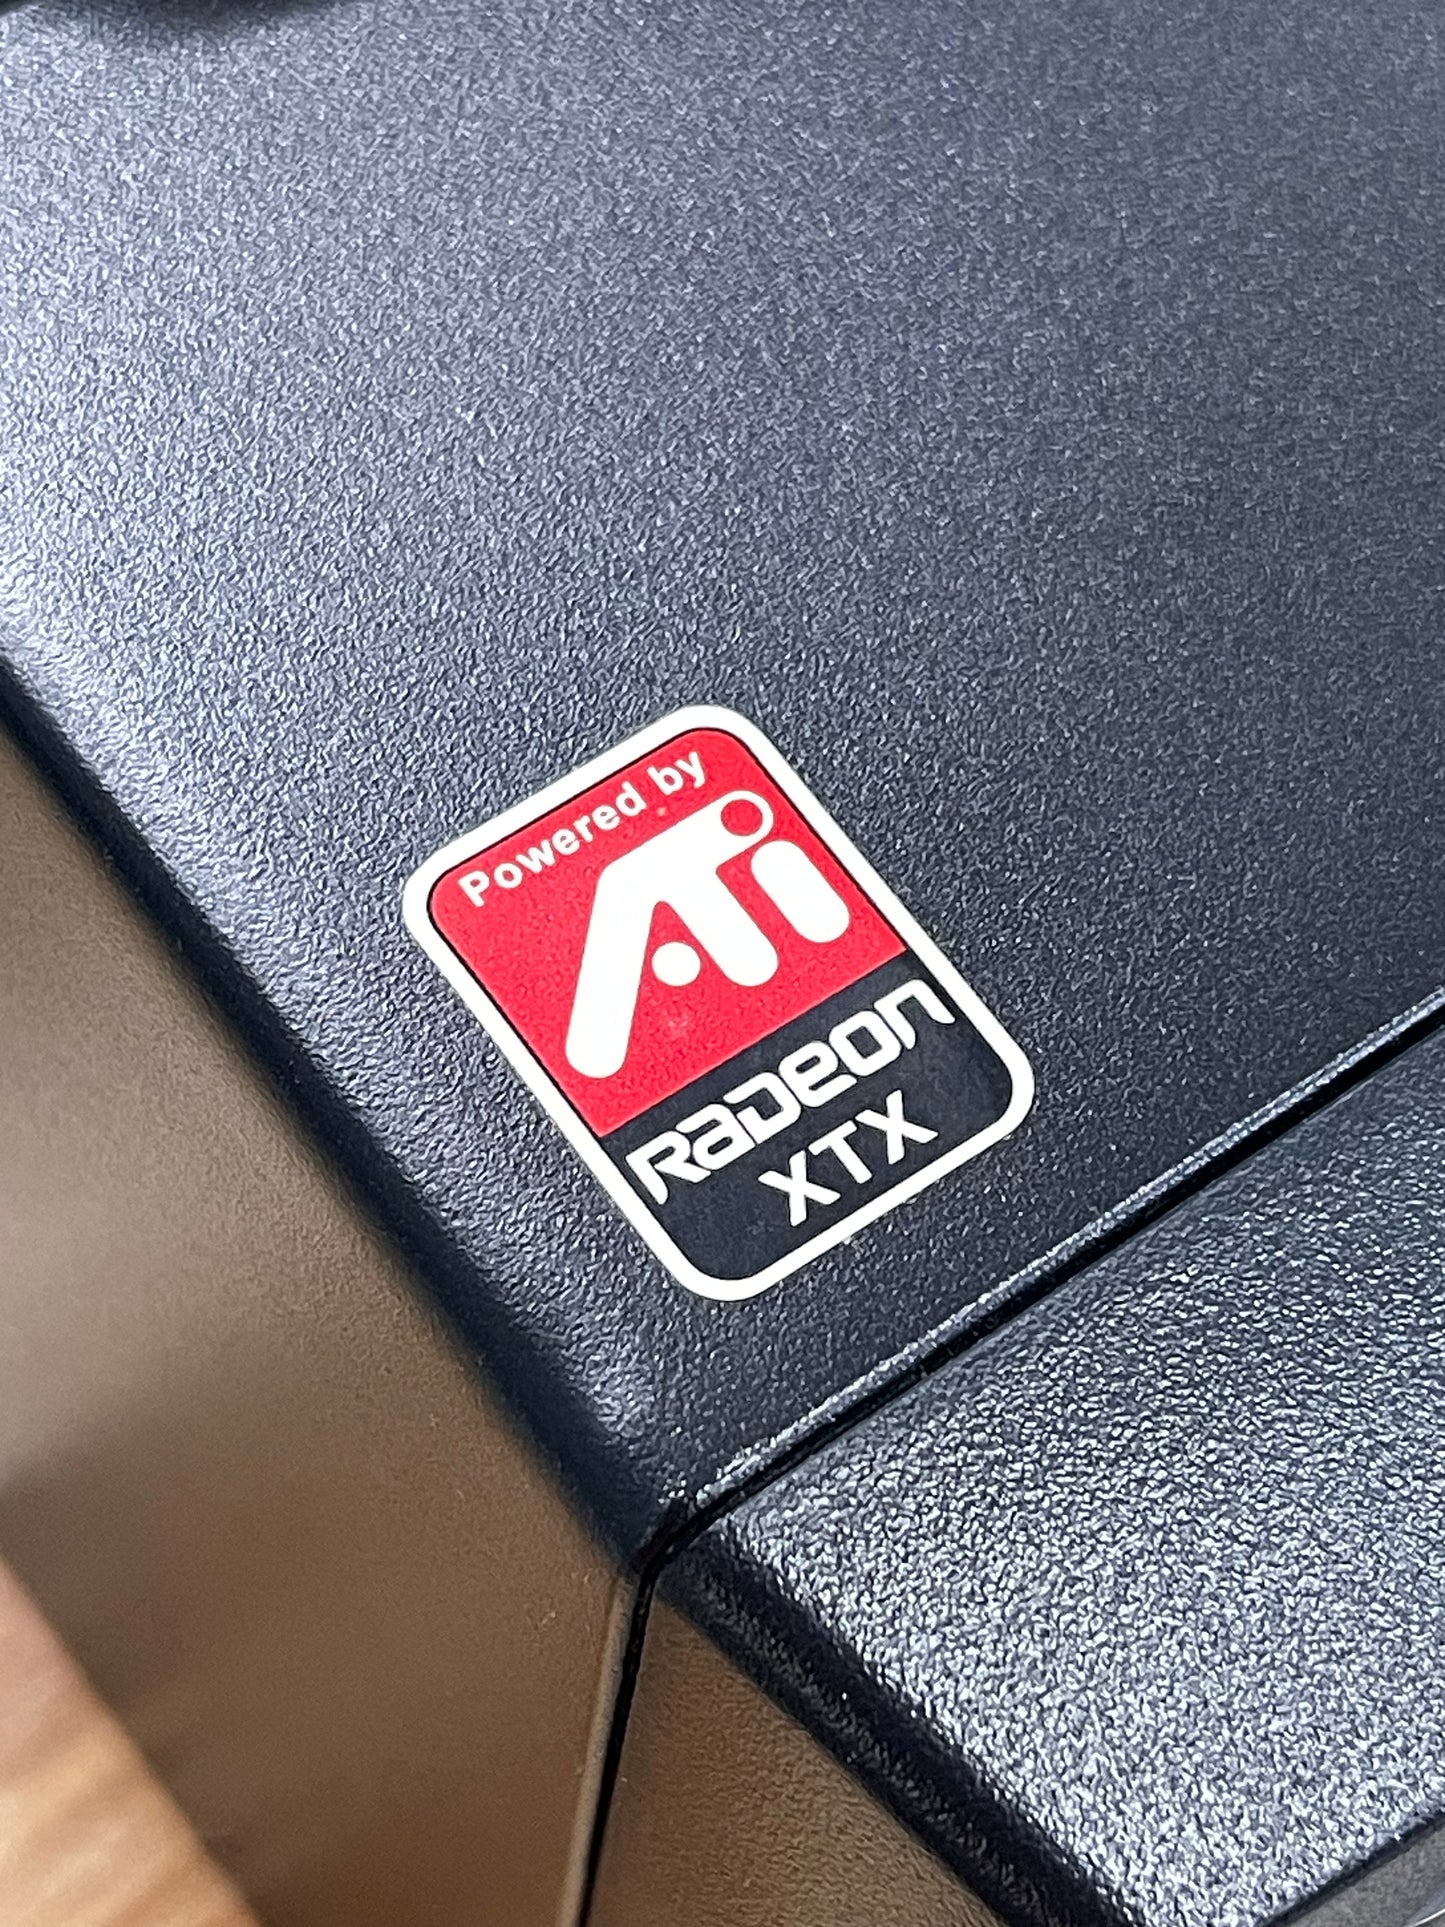 ATI Radeon XTX Series, Powered By Case Badge Sticker - White